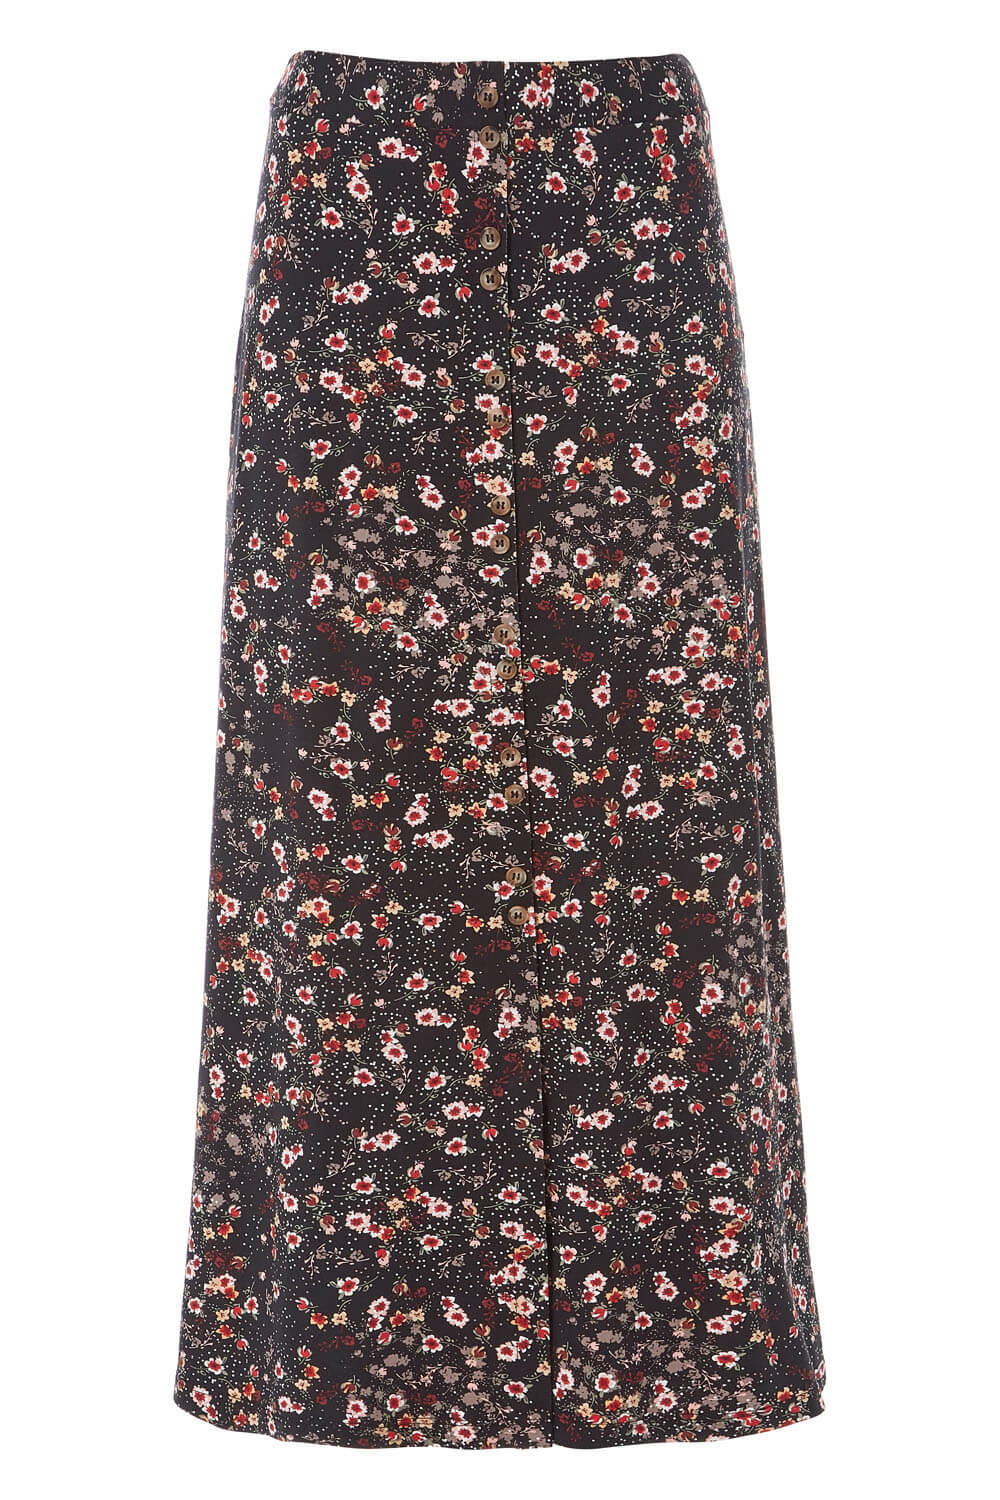 Black Floral Print Button Through Midi Skirt, Image 6 of 6